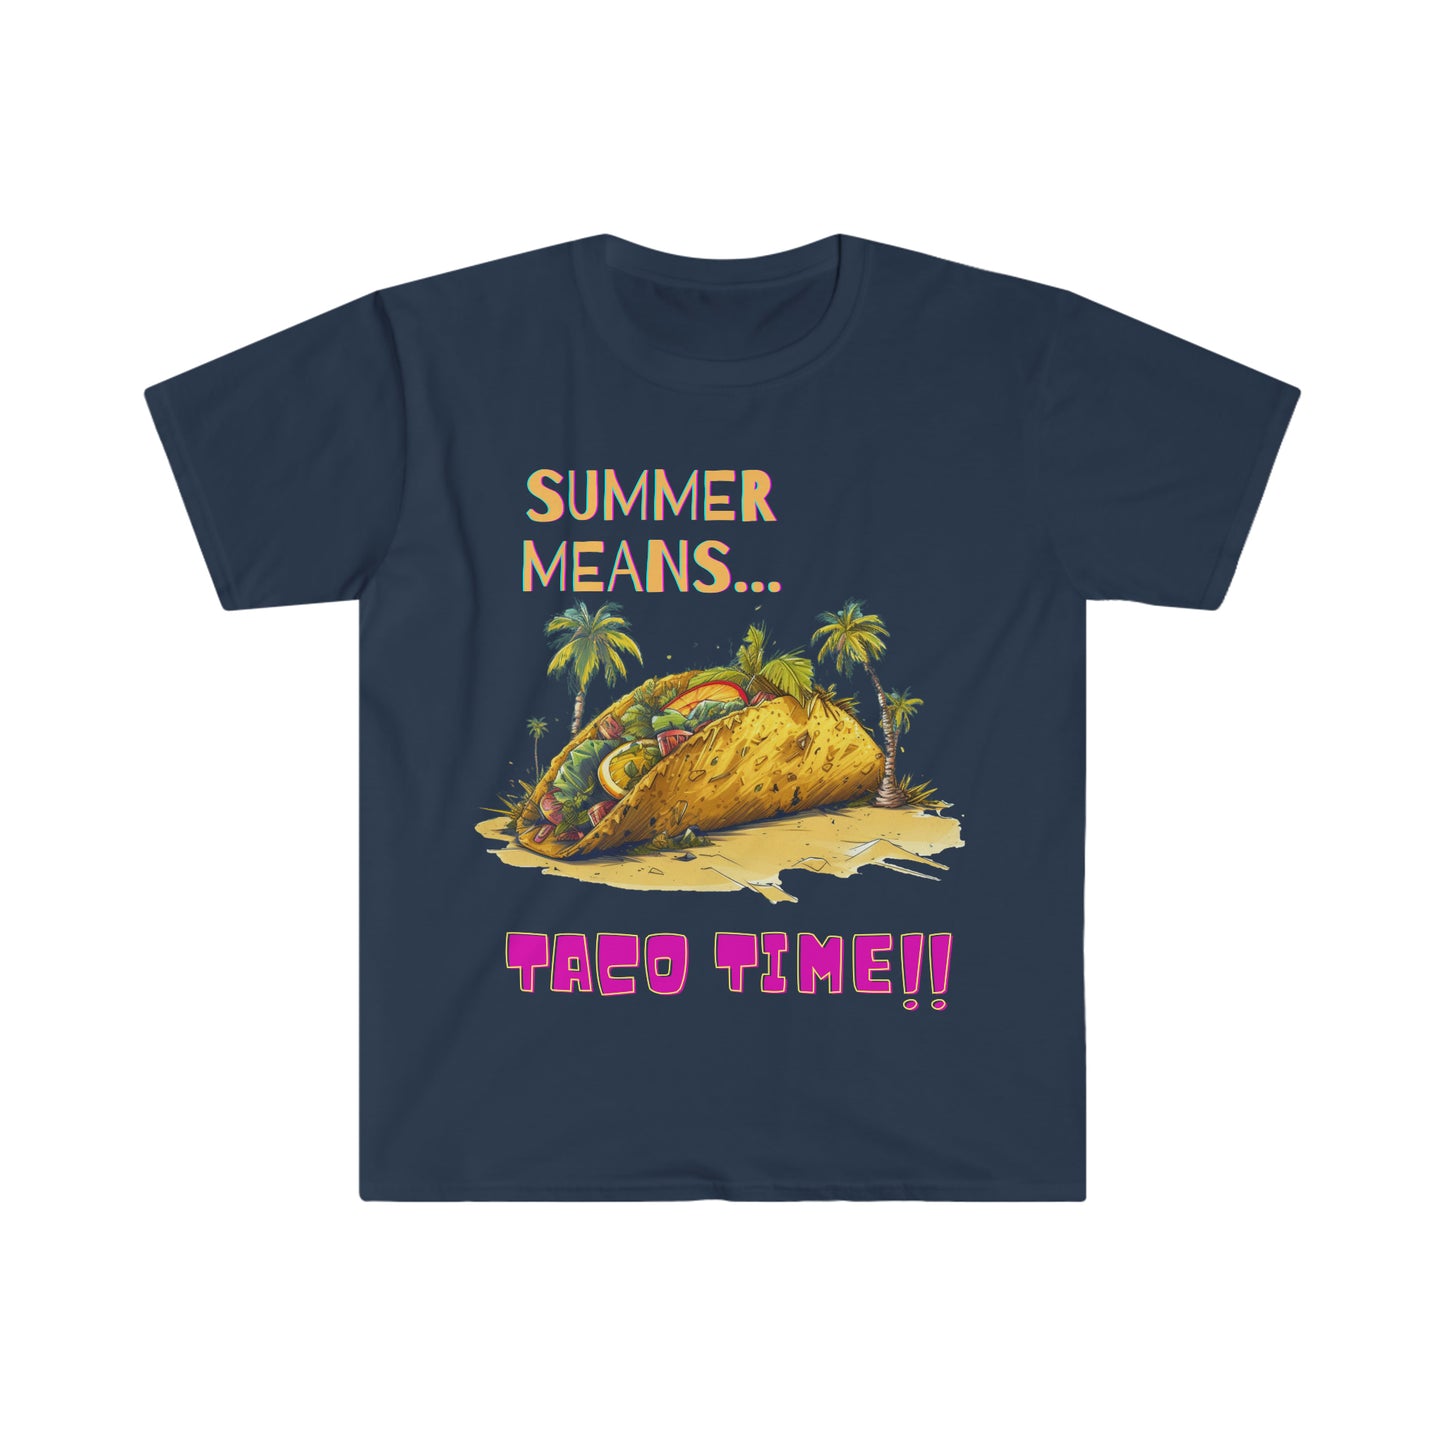 Taco Time - Unisex Softstyle T-Shirt